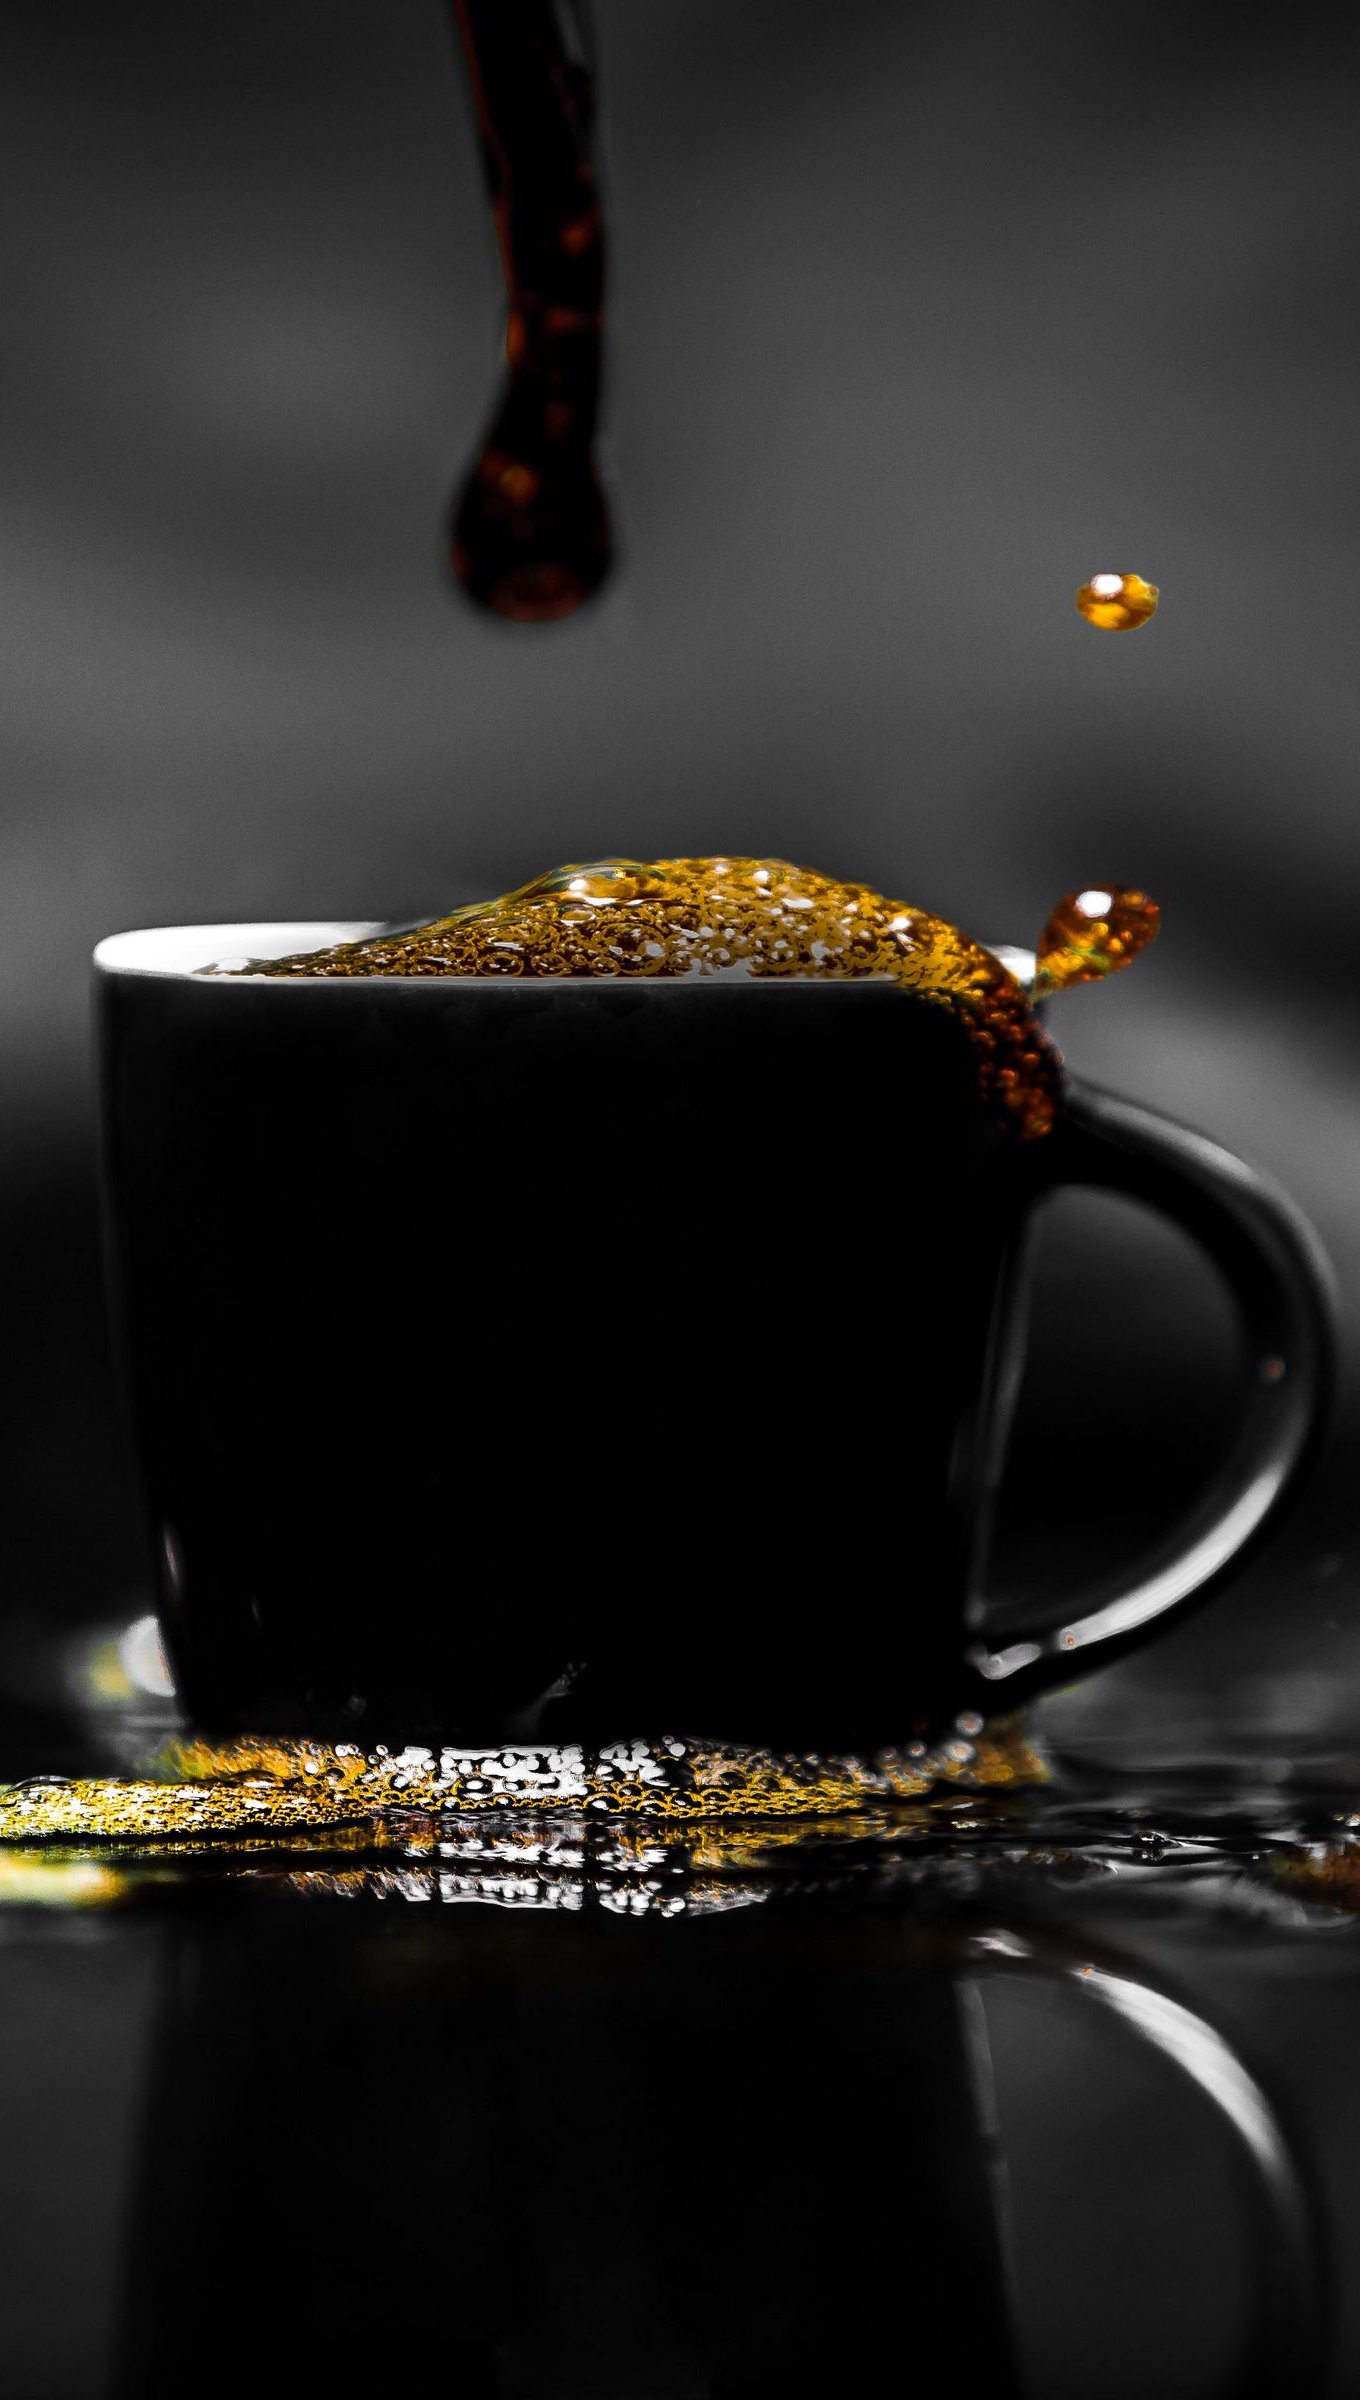 Cup of black coffee Wallpaper 4k Ultra HD ID:5730